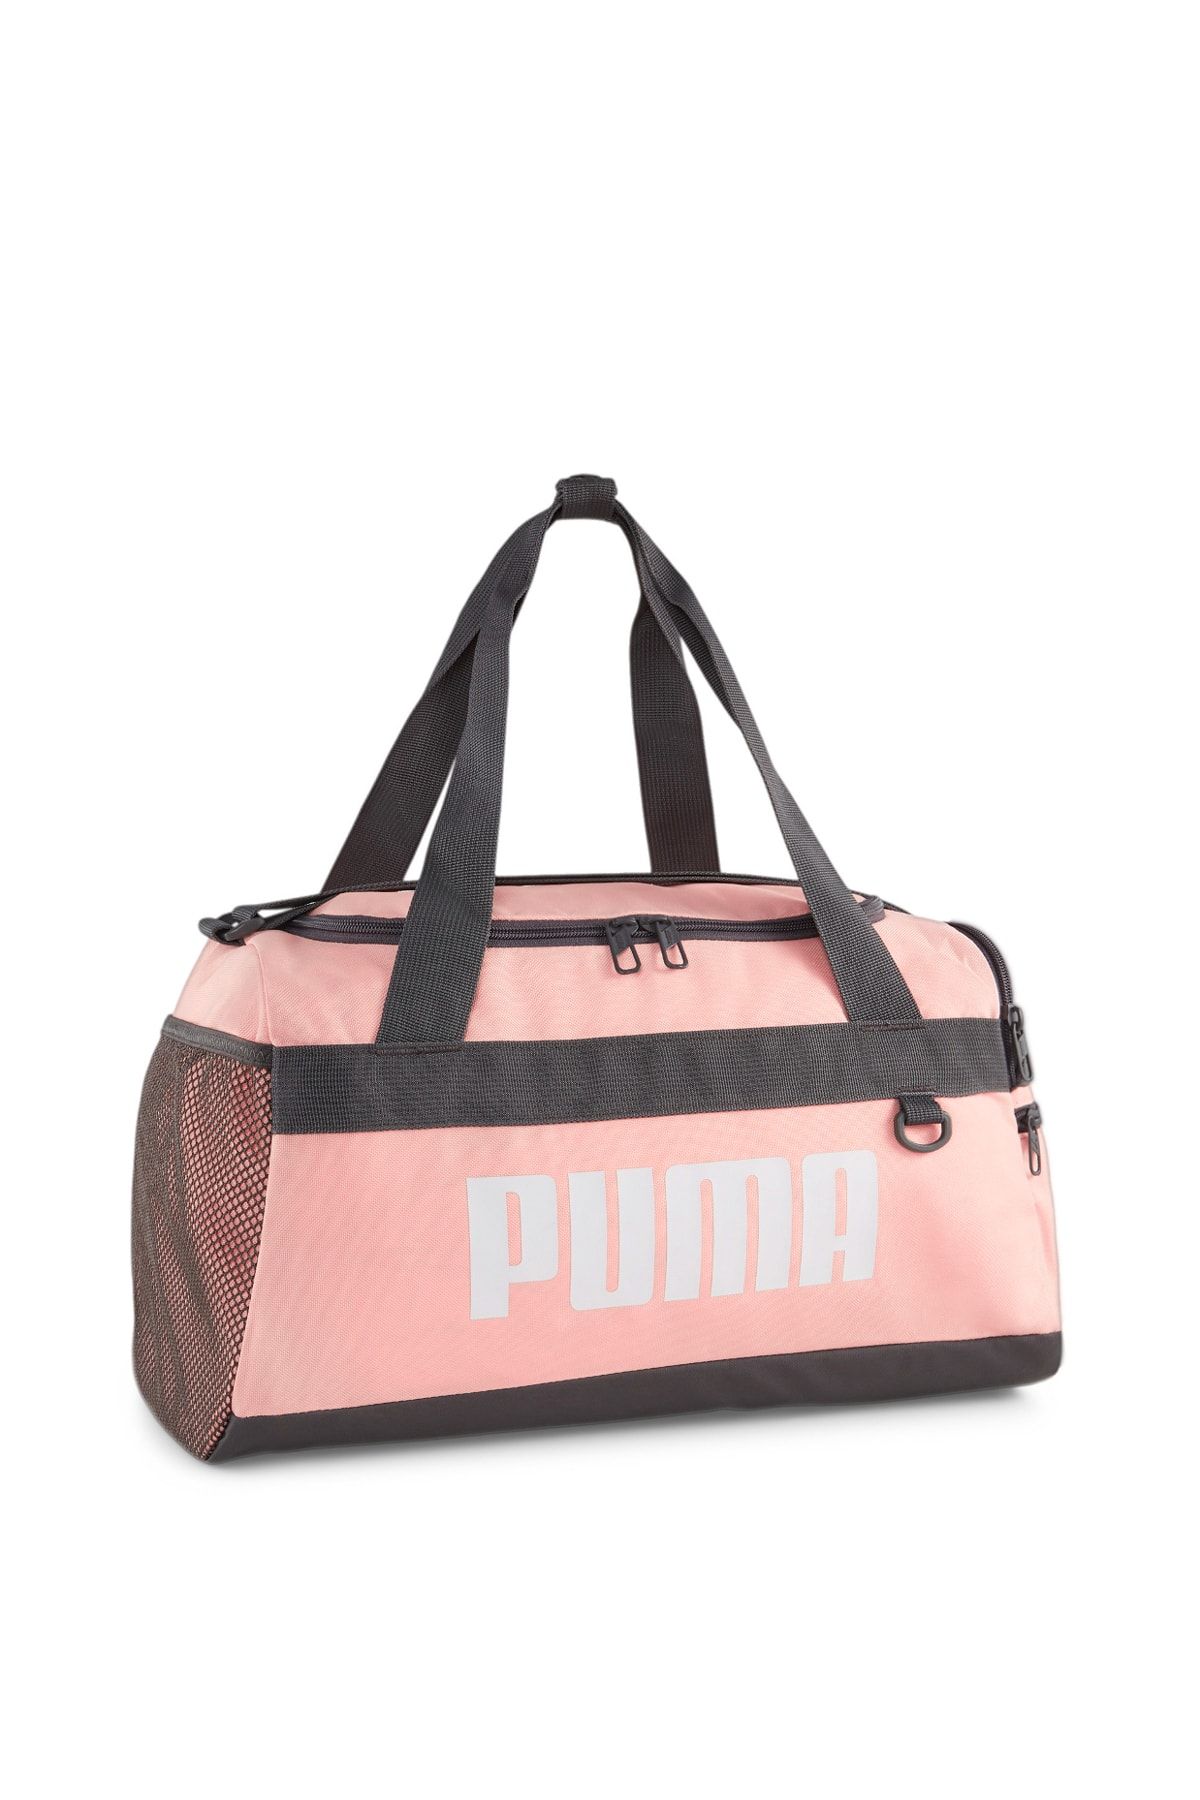 Puma 79529 Sports Bag Unisex